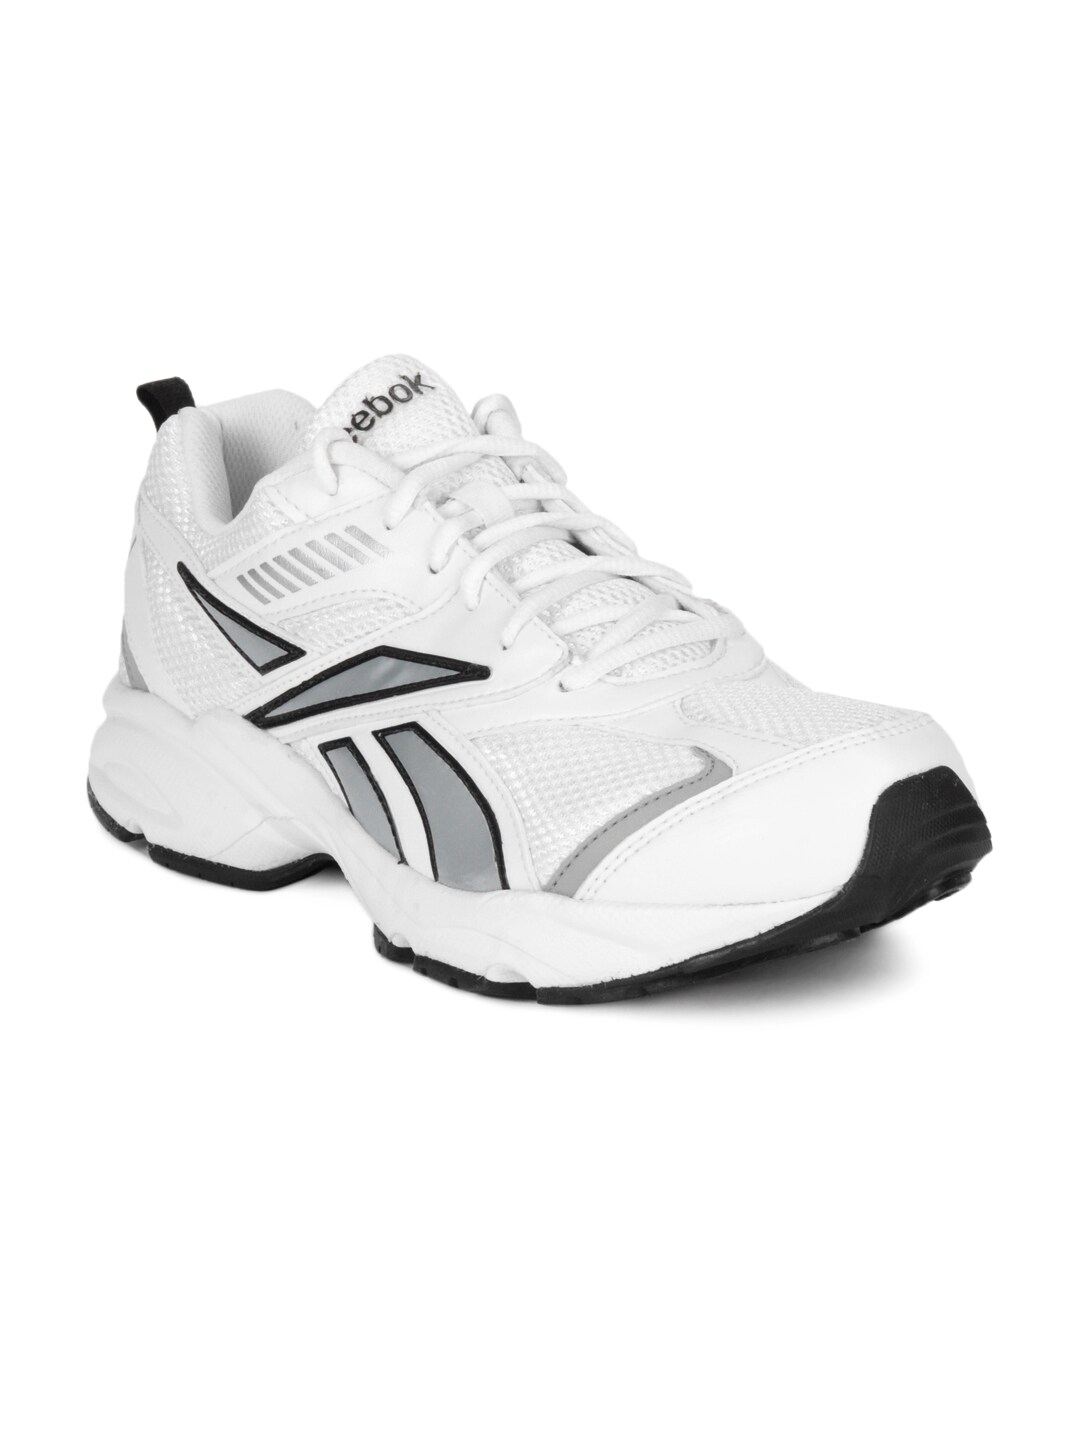 Reebok Men White Active Sports Shoes